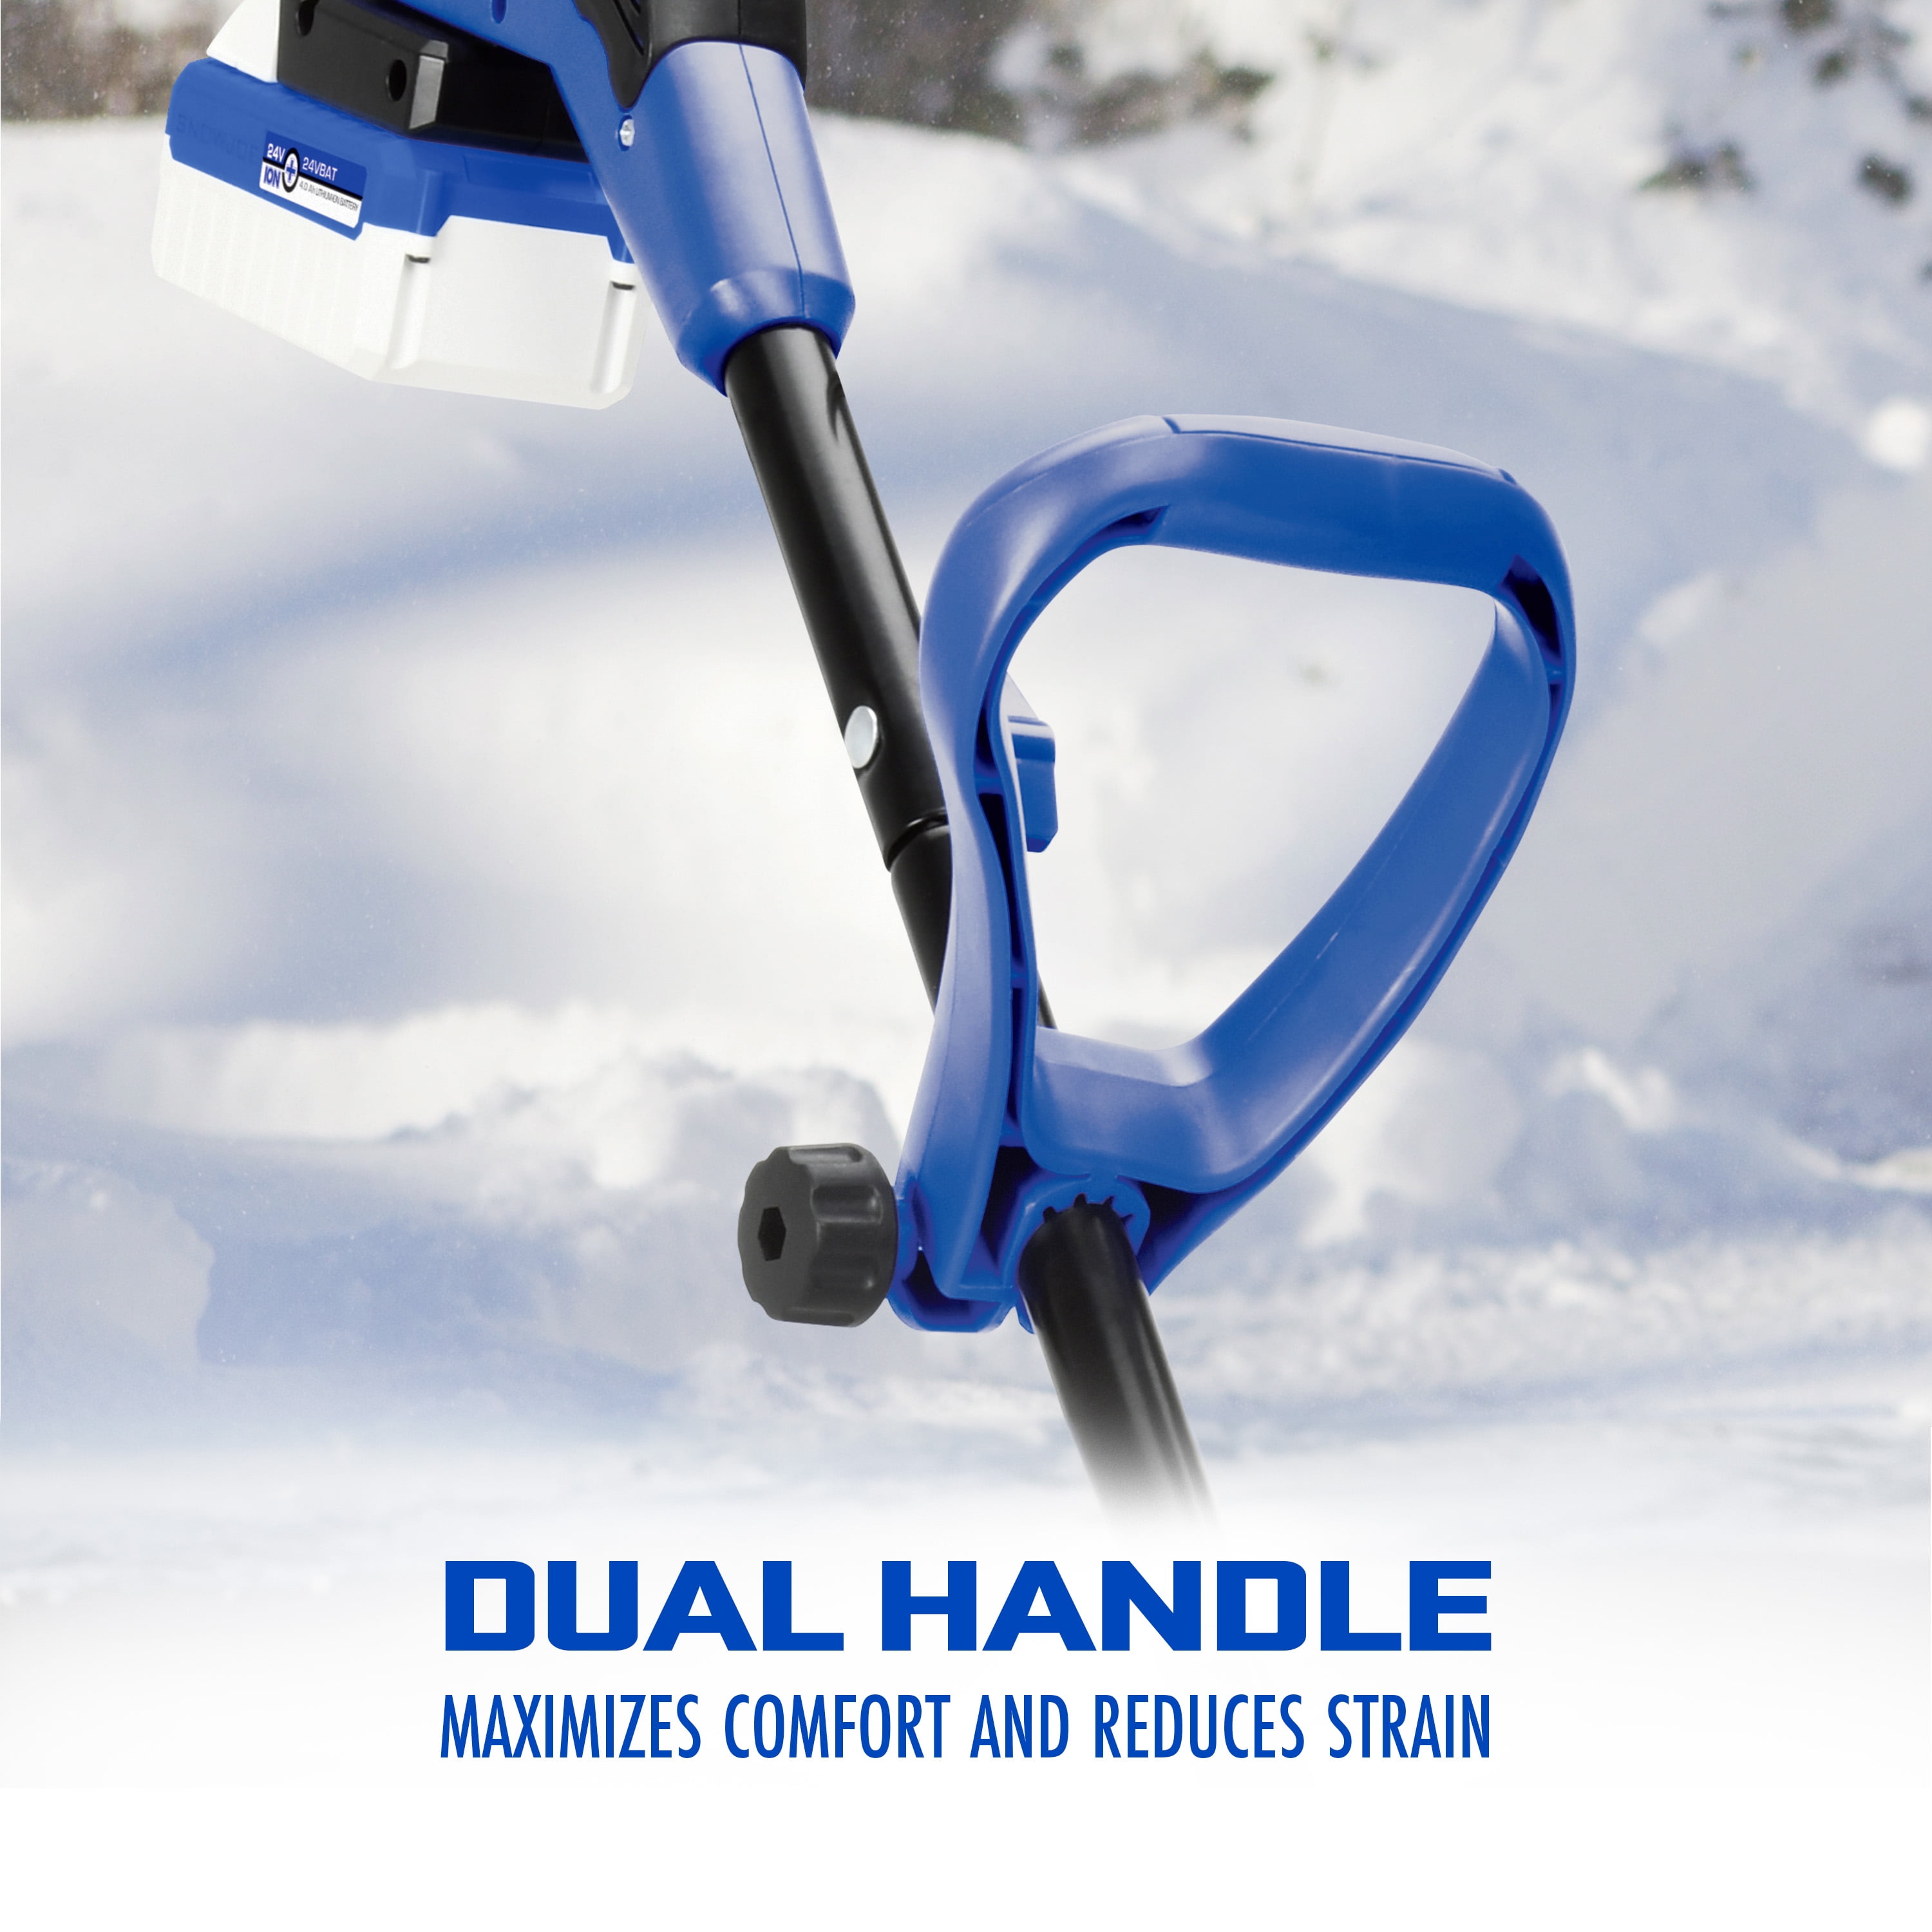 EGO Cordless Snow Shovel – for Decks, Sidewalks, Driveways